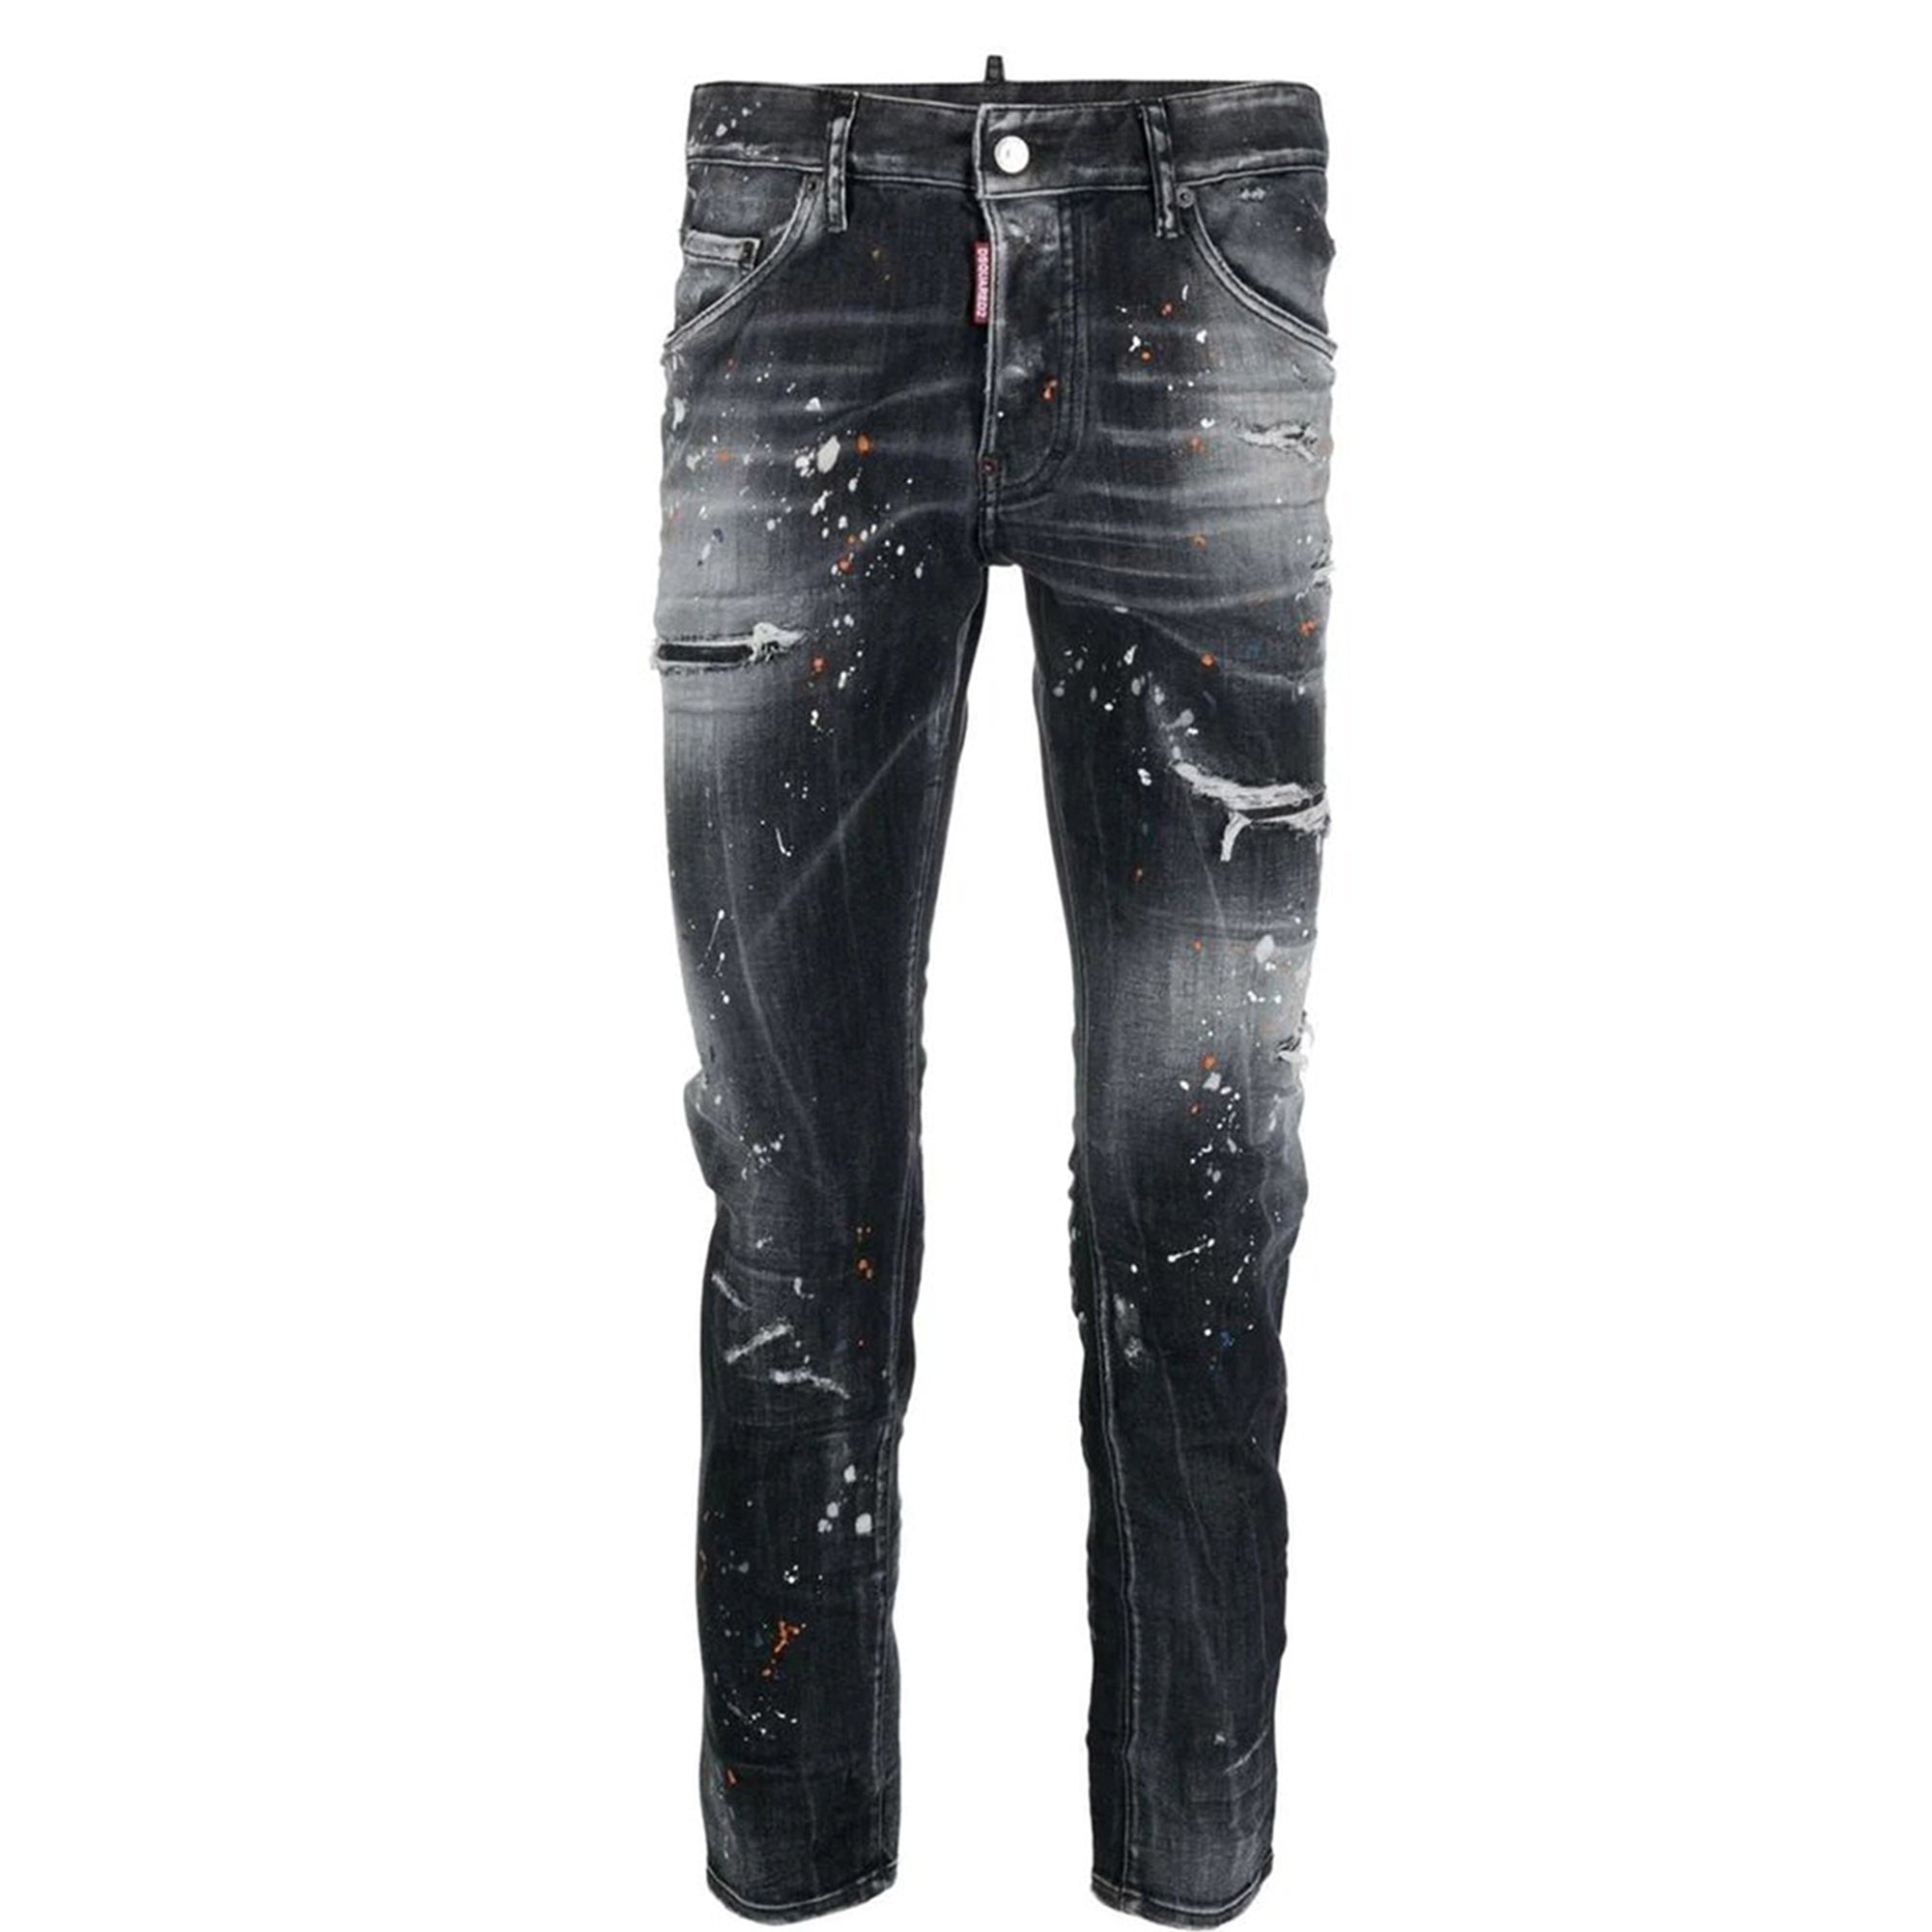 Dsquared2 Mens 5 Pocket Skater Jeans Black